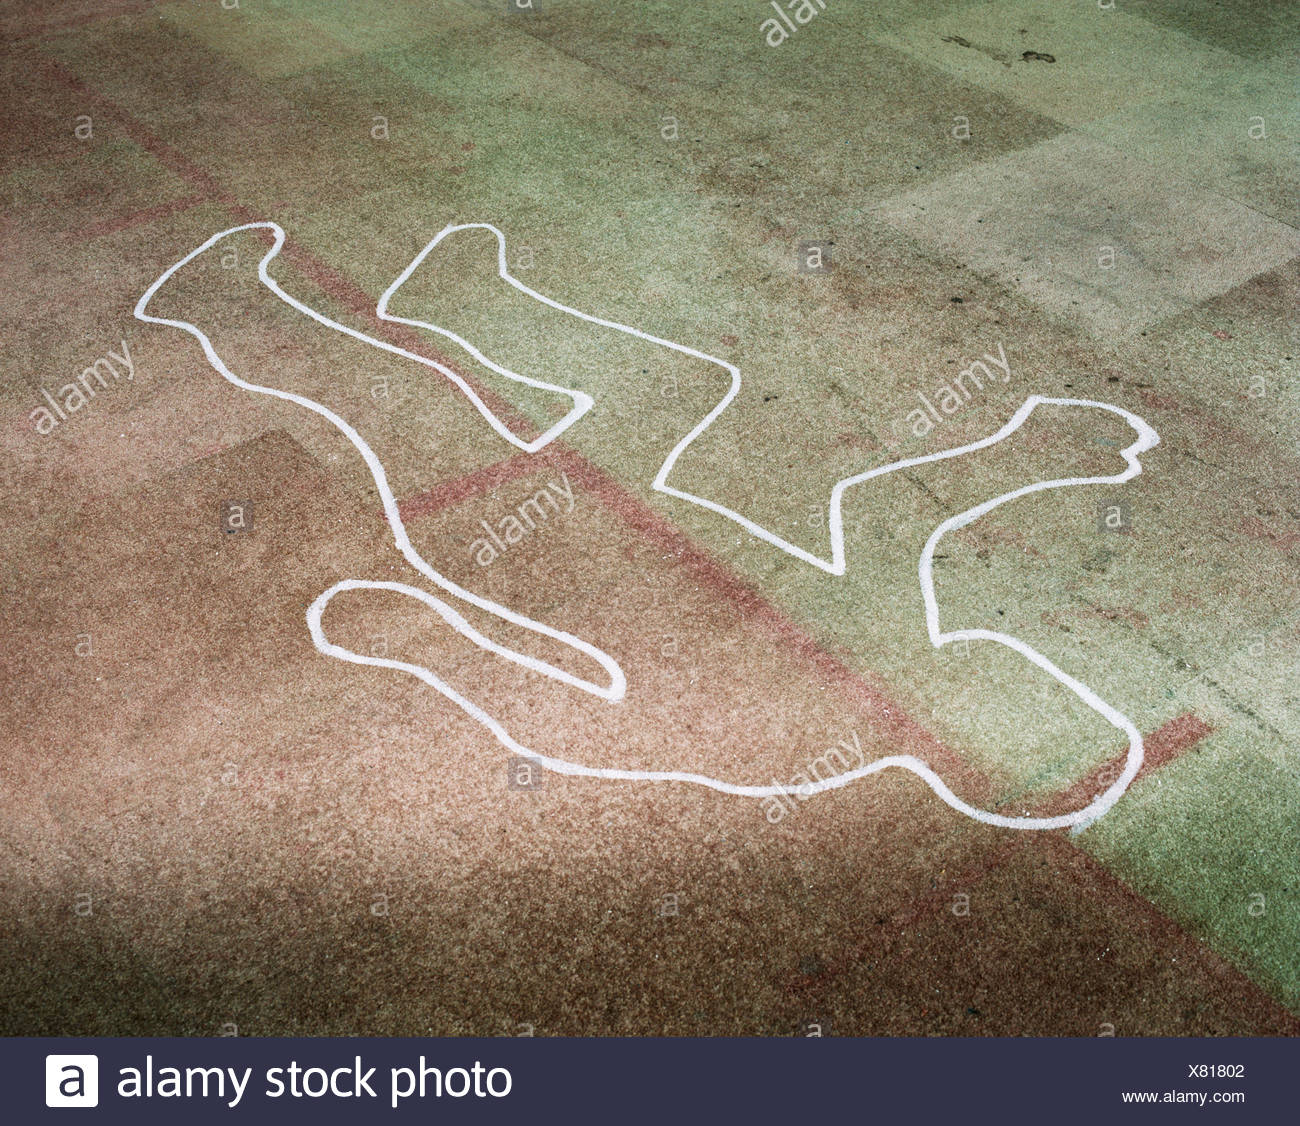 Chalk outline of a body Stock Photo - Alamy